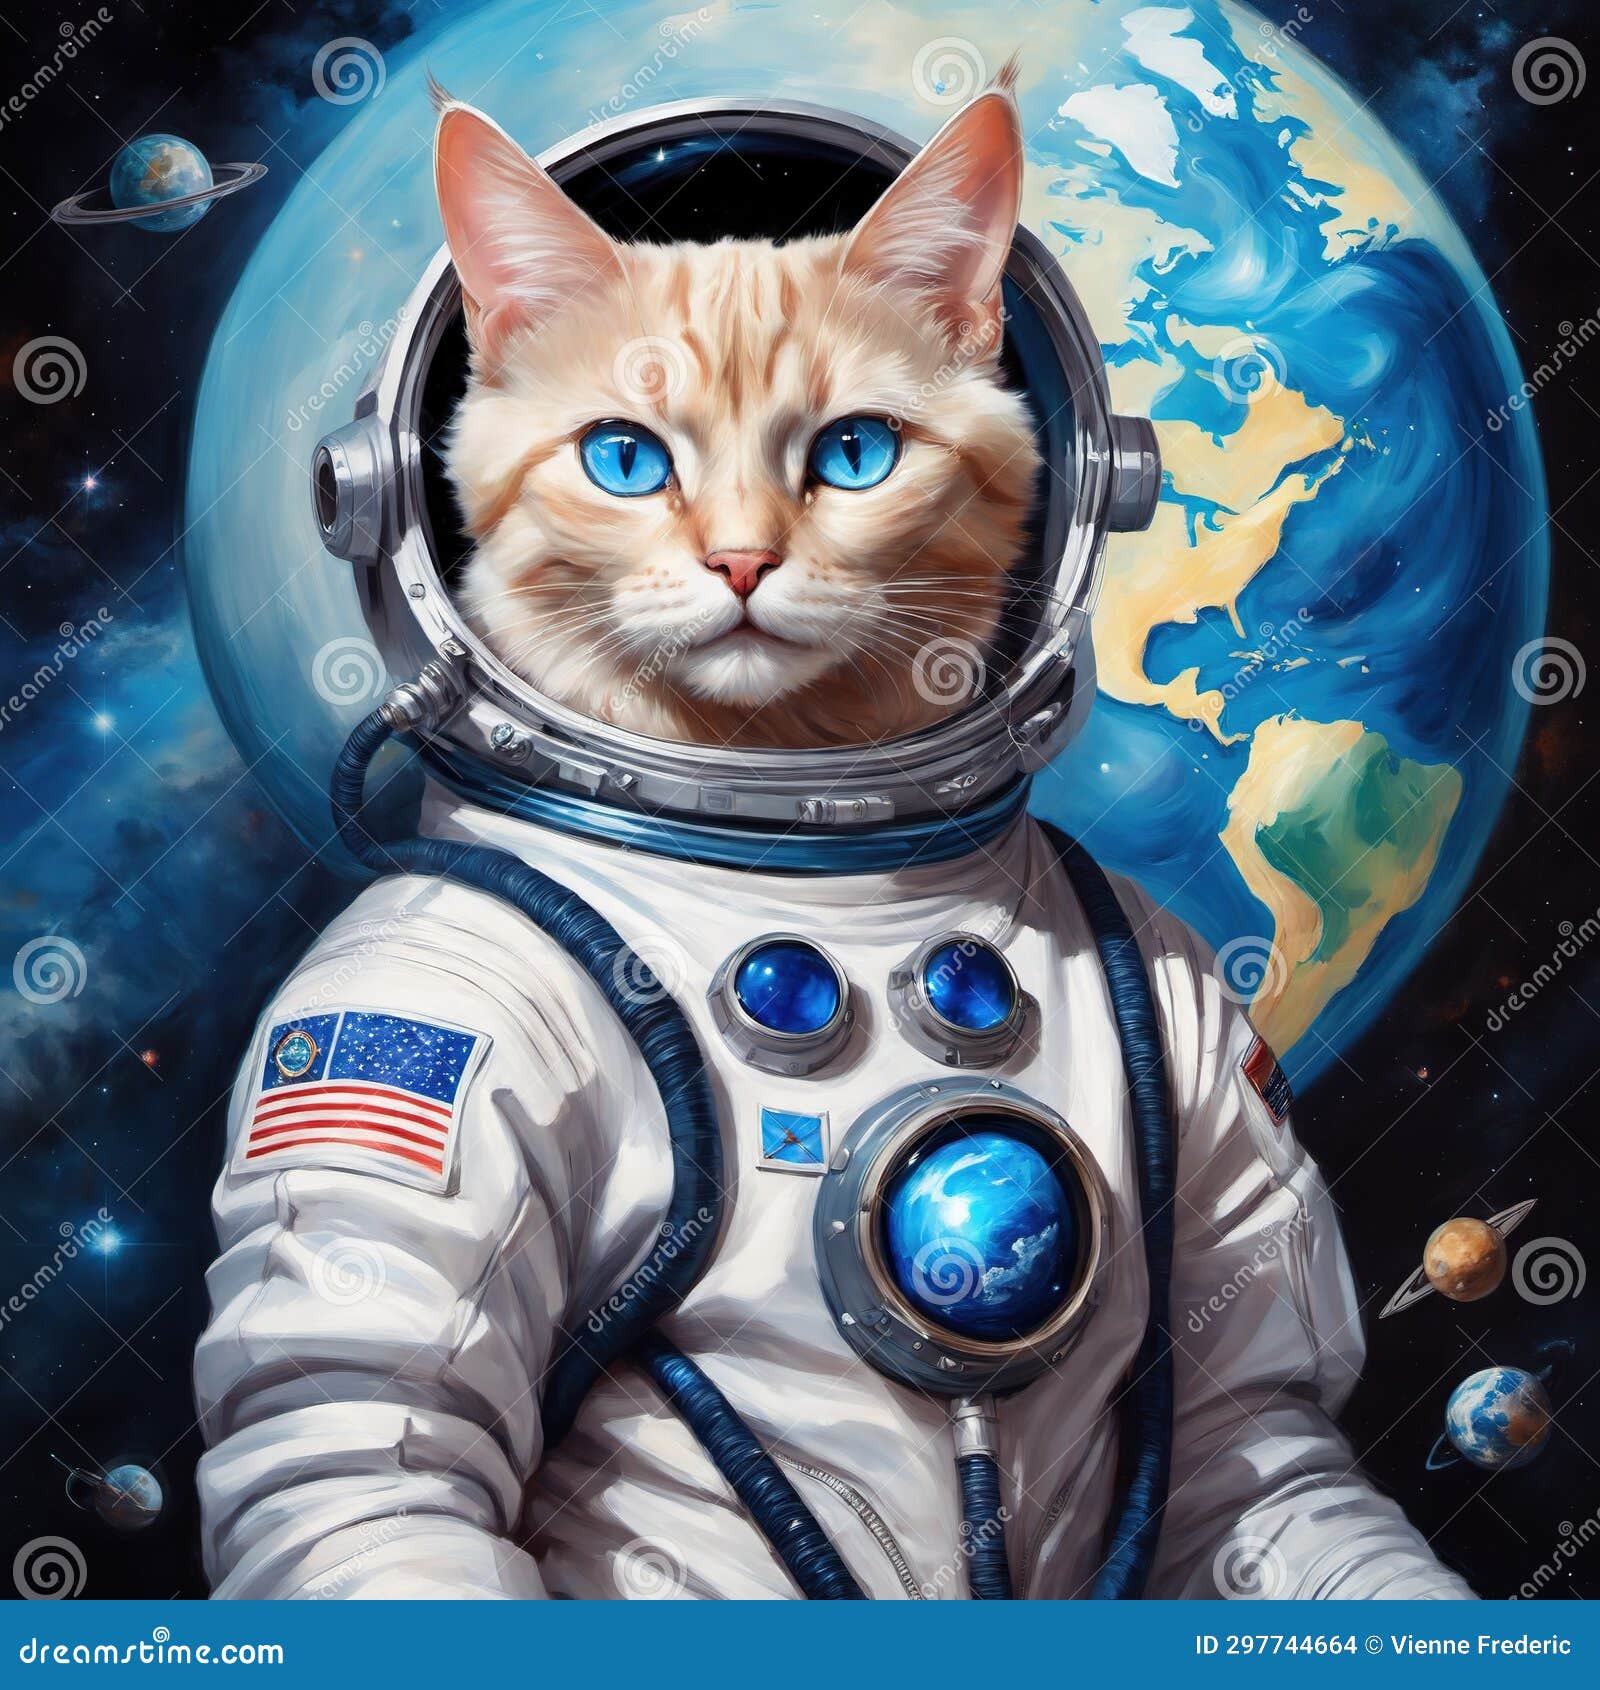 Astronaut cat in a spacesuit. Portrait of a cat in space, cat